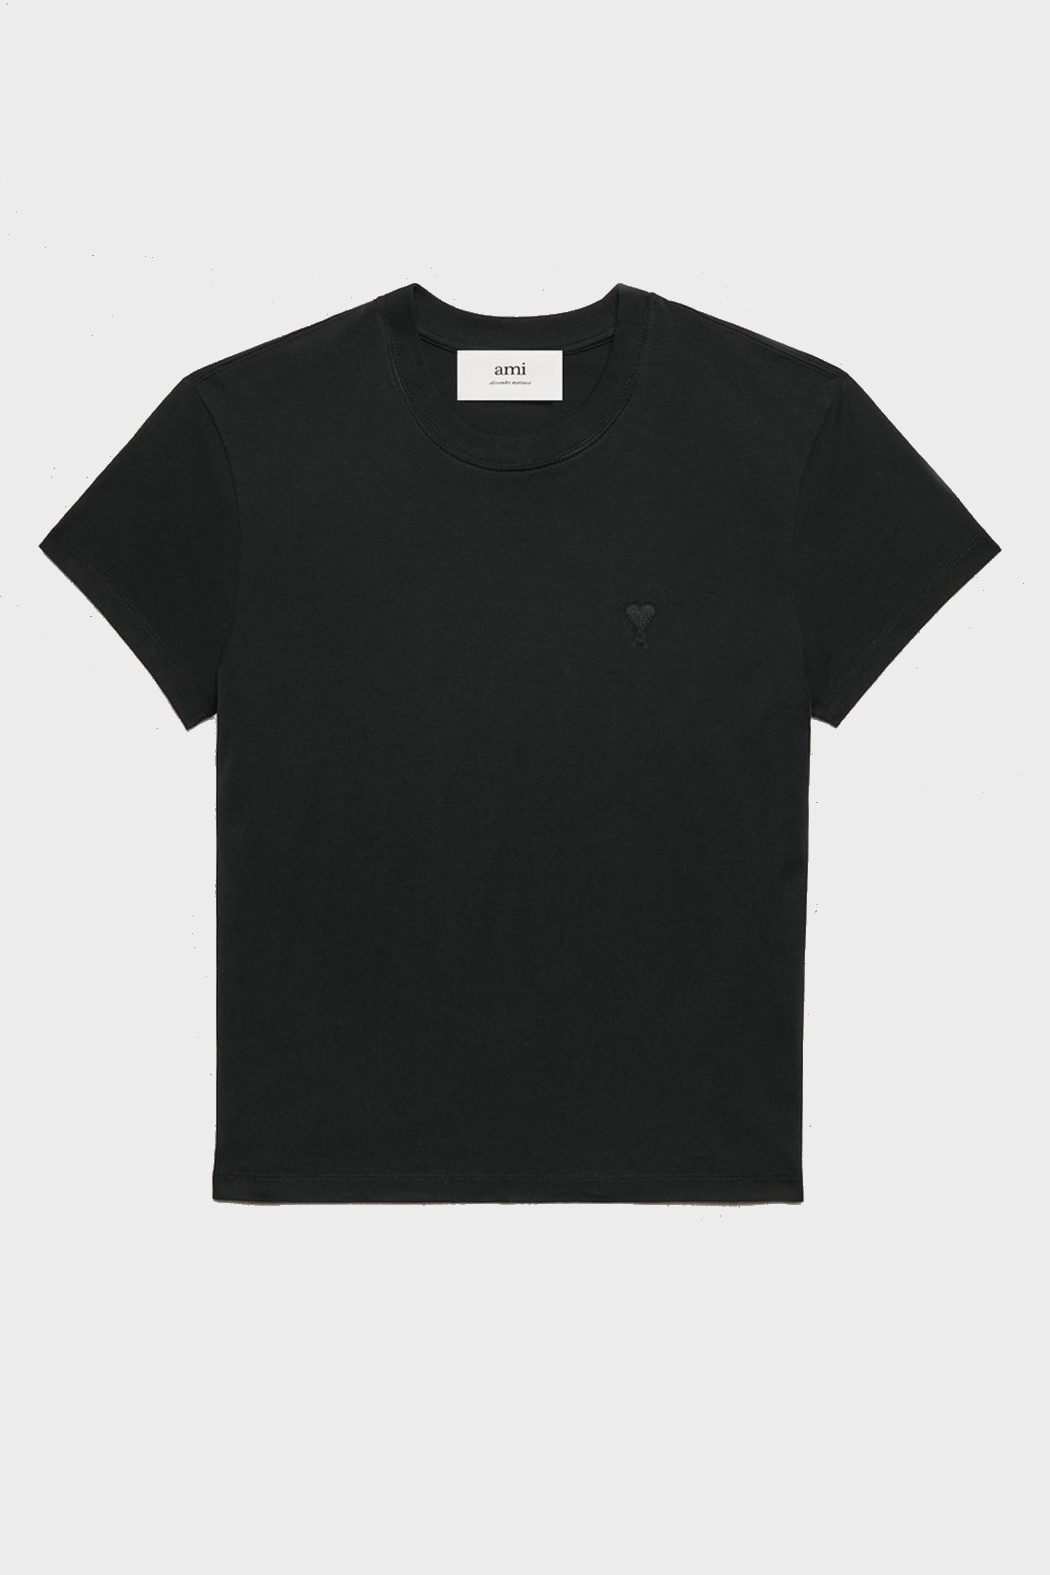 AMI PARIS de Coeur T-Shirt in Black